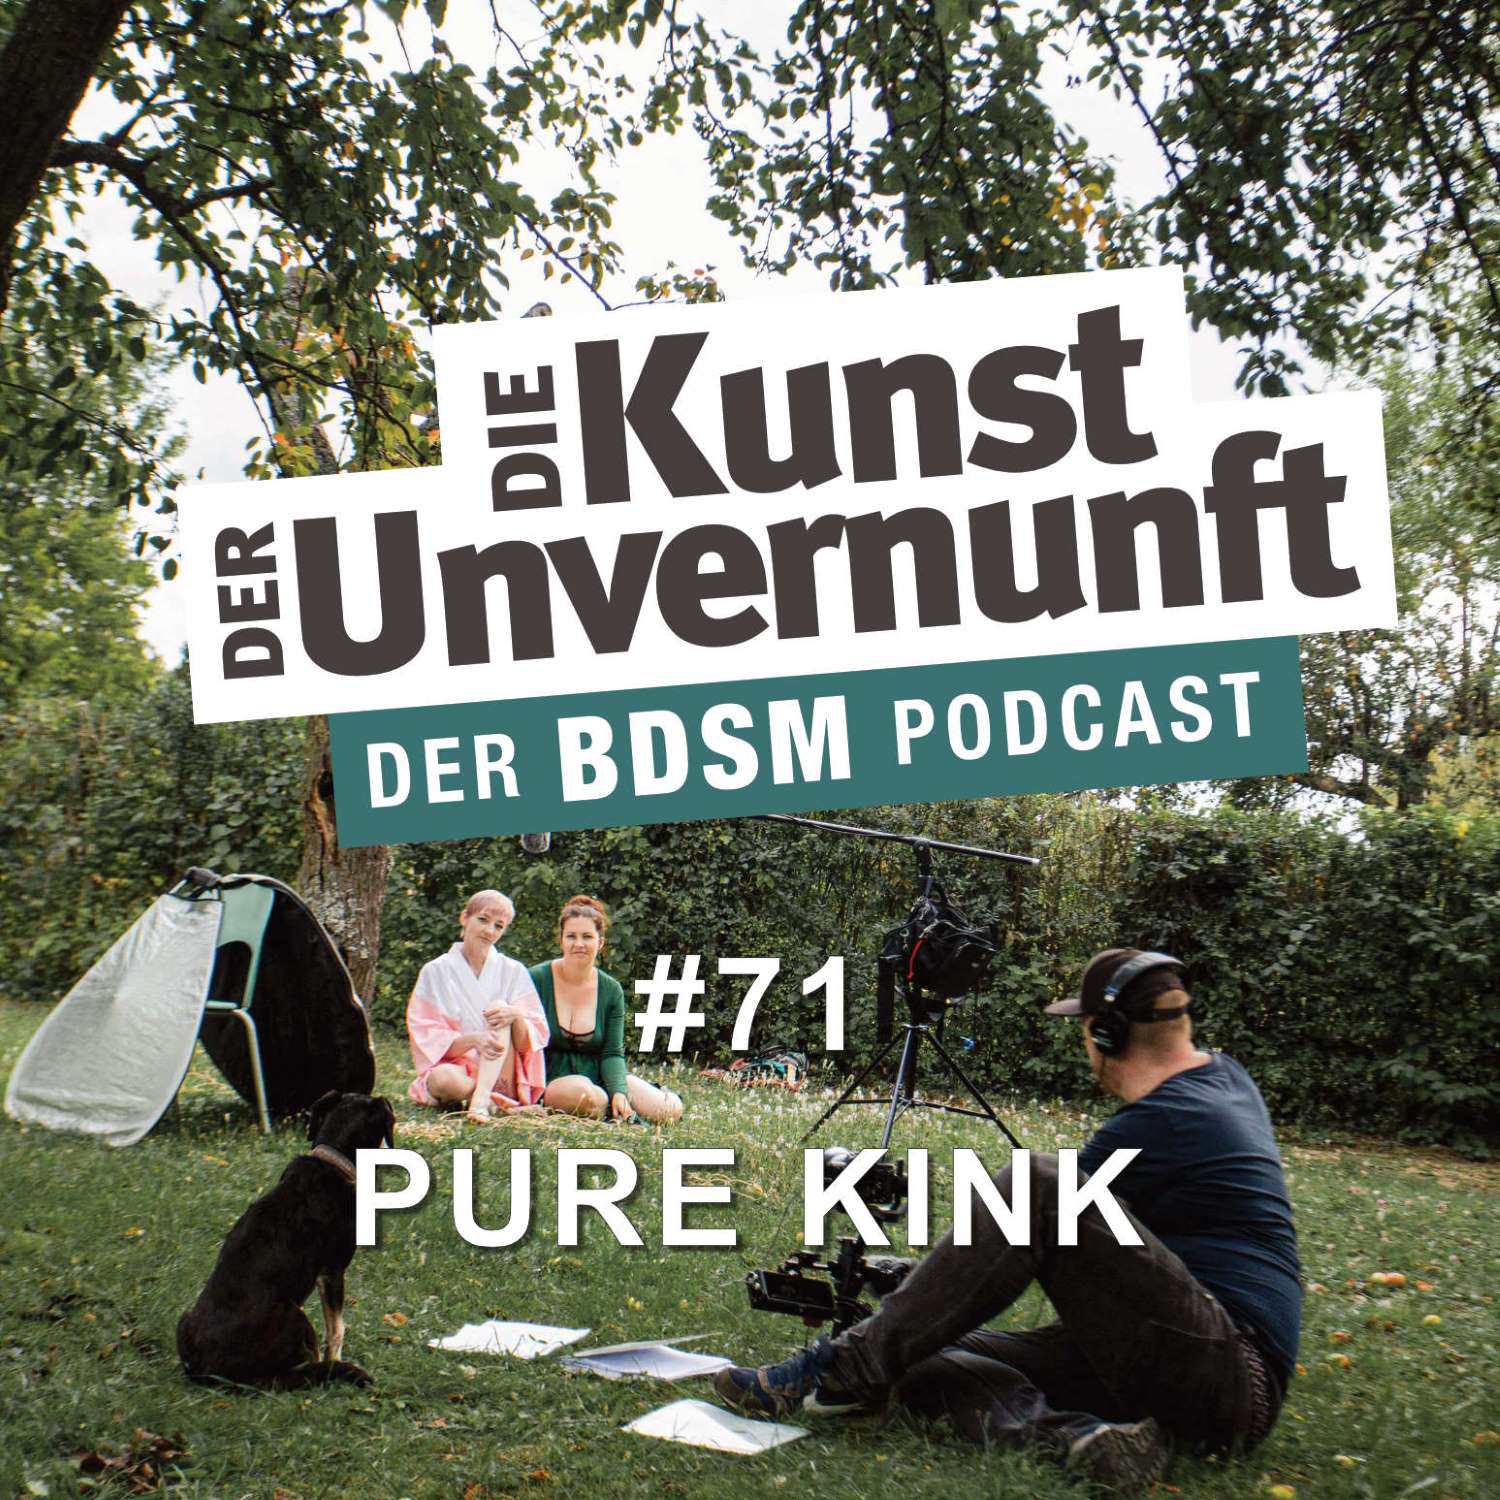 Pure Kink - Eine Dokumentation über Kink